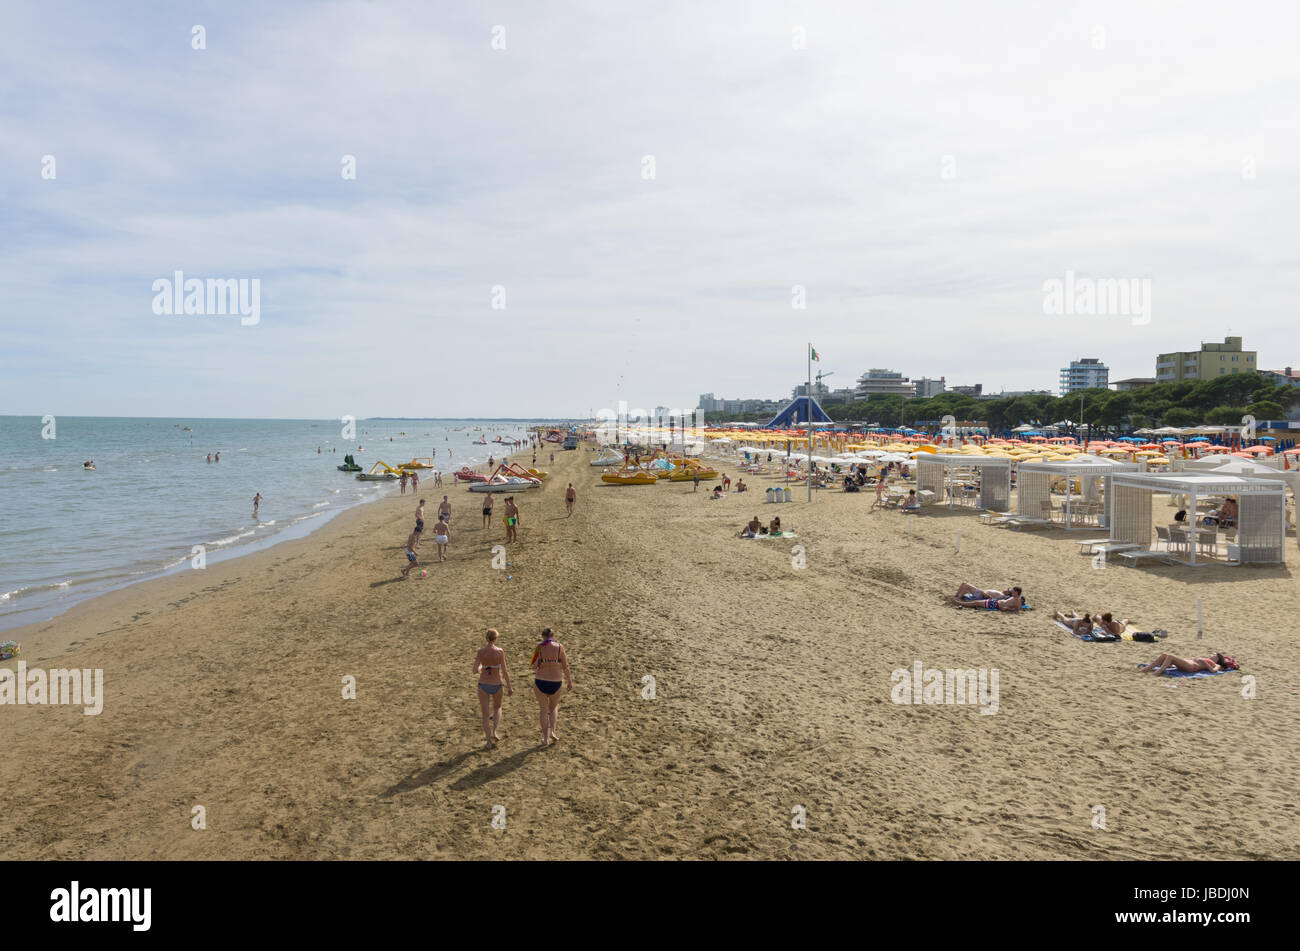 La plage de Lignano Sabbiadoro - Italie (9 juin 2017) Banque D'Images